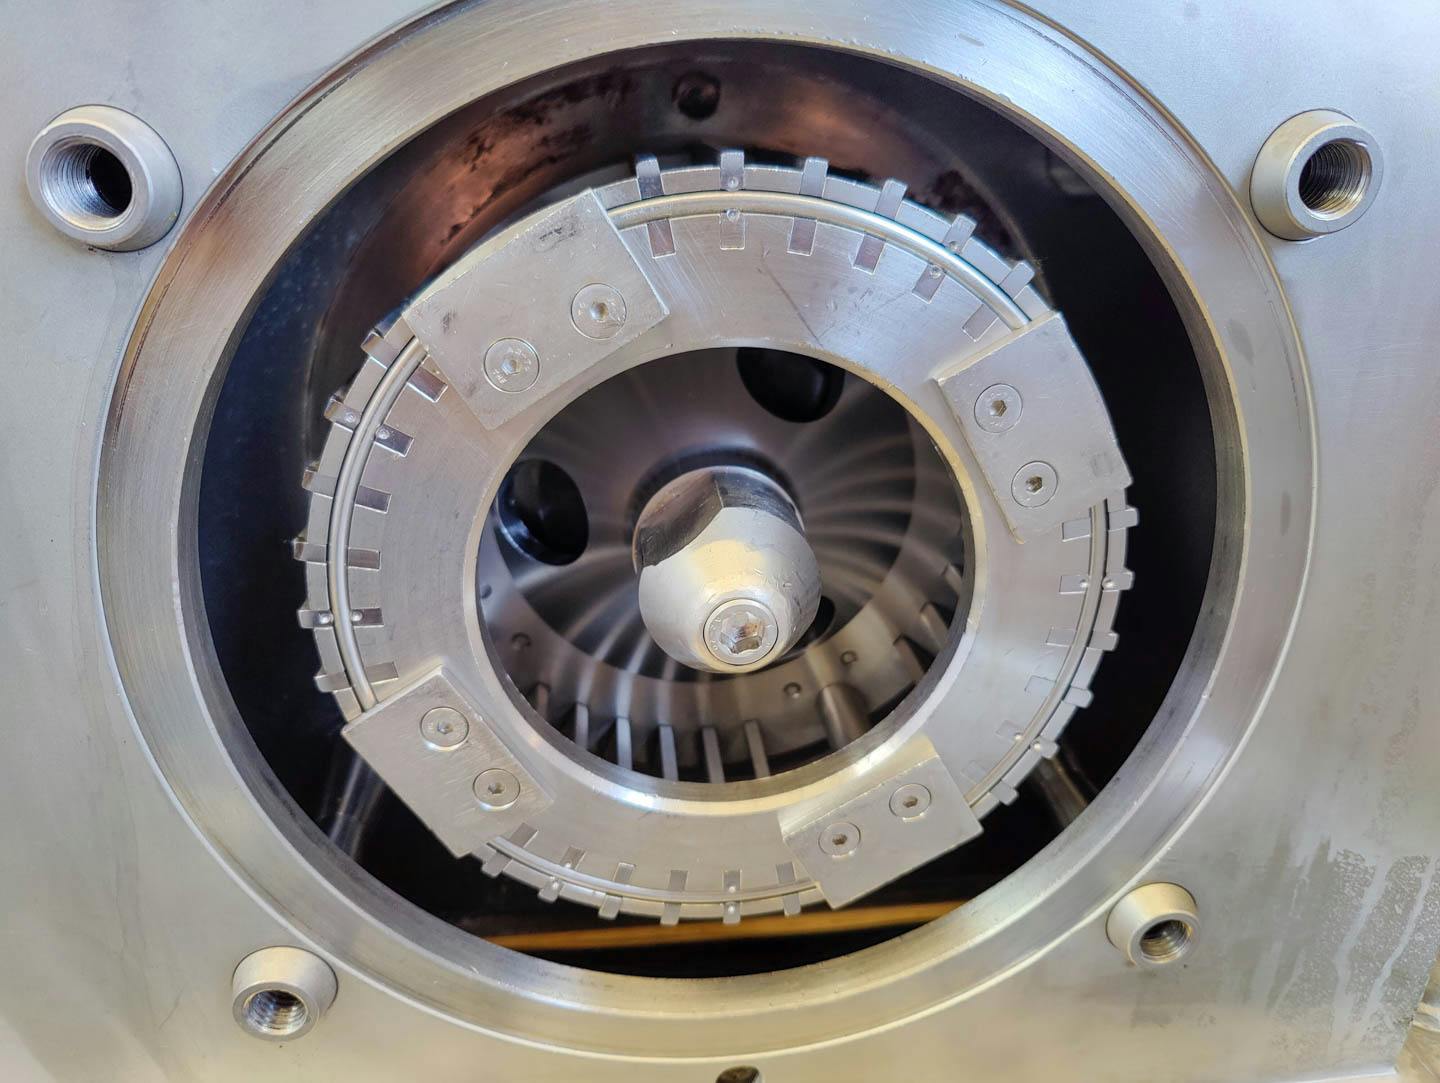 Bauermeister UMT 0.3 N Ex "blast rotor" - Mulino a impatto fino - image 8